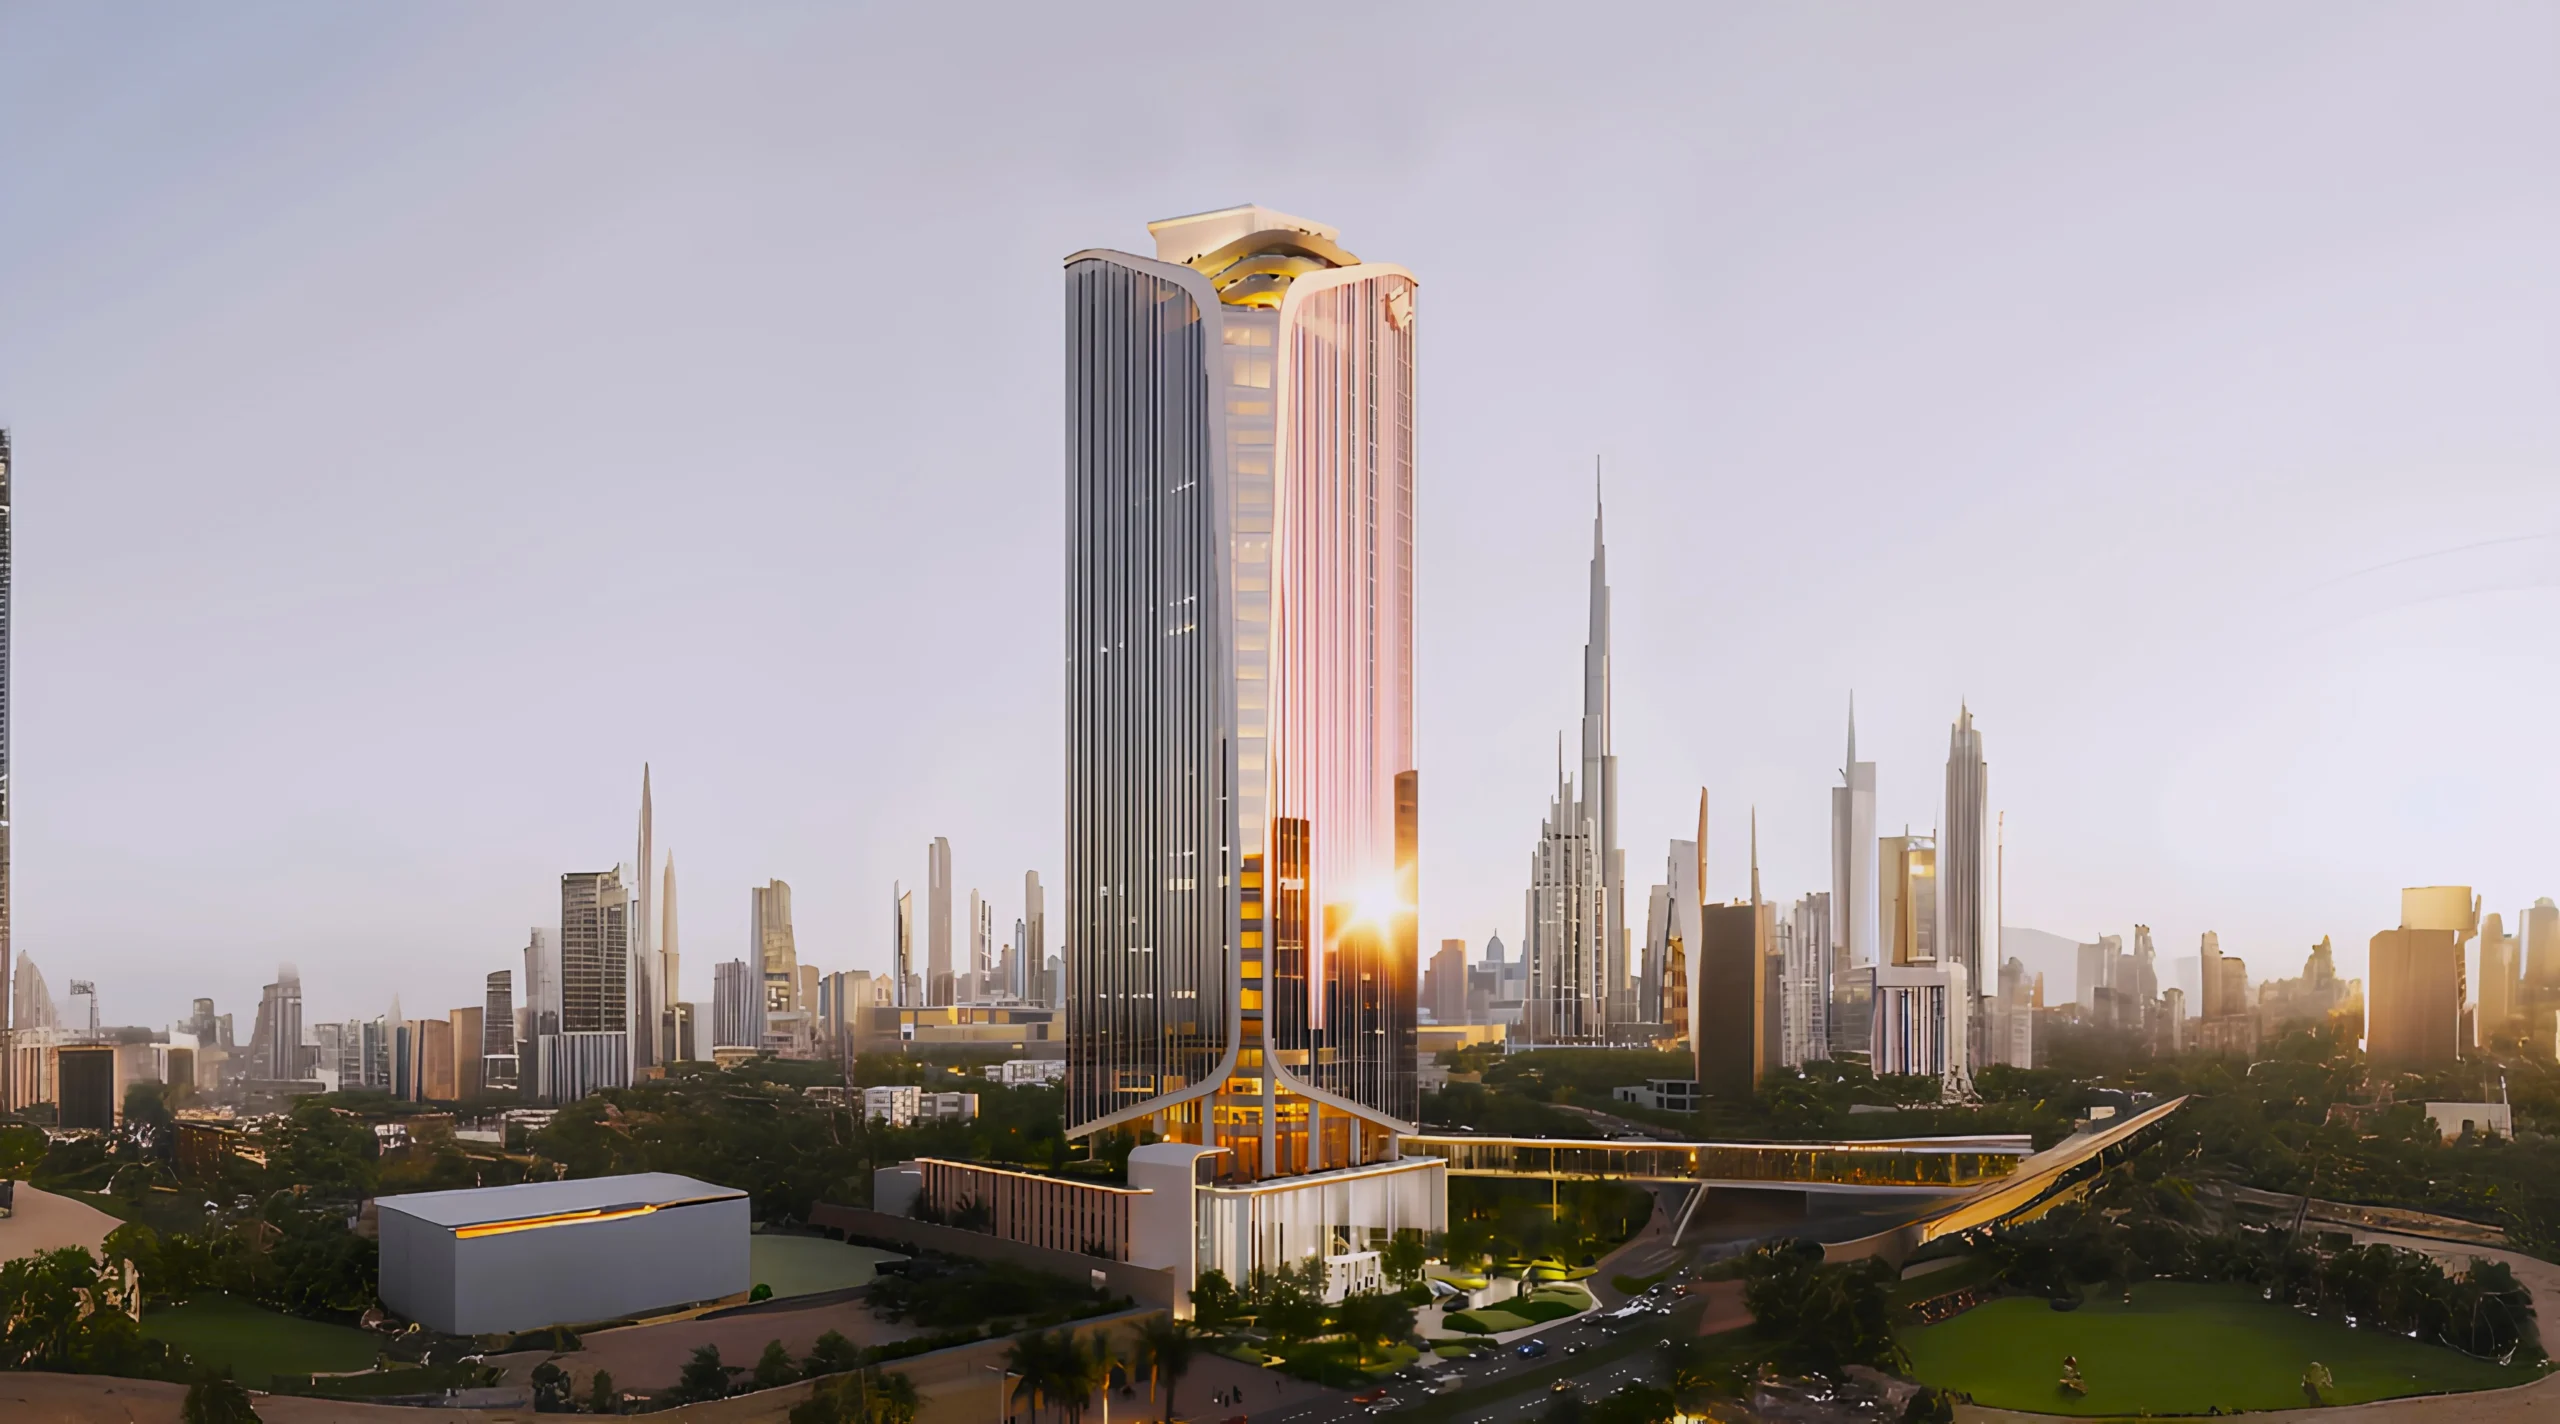 Immersive Tower at Dubai International Financial Centre (DIFC) by DAR Group